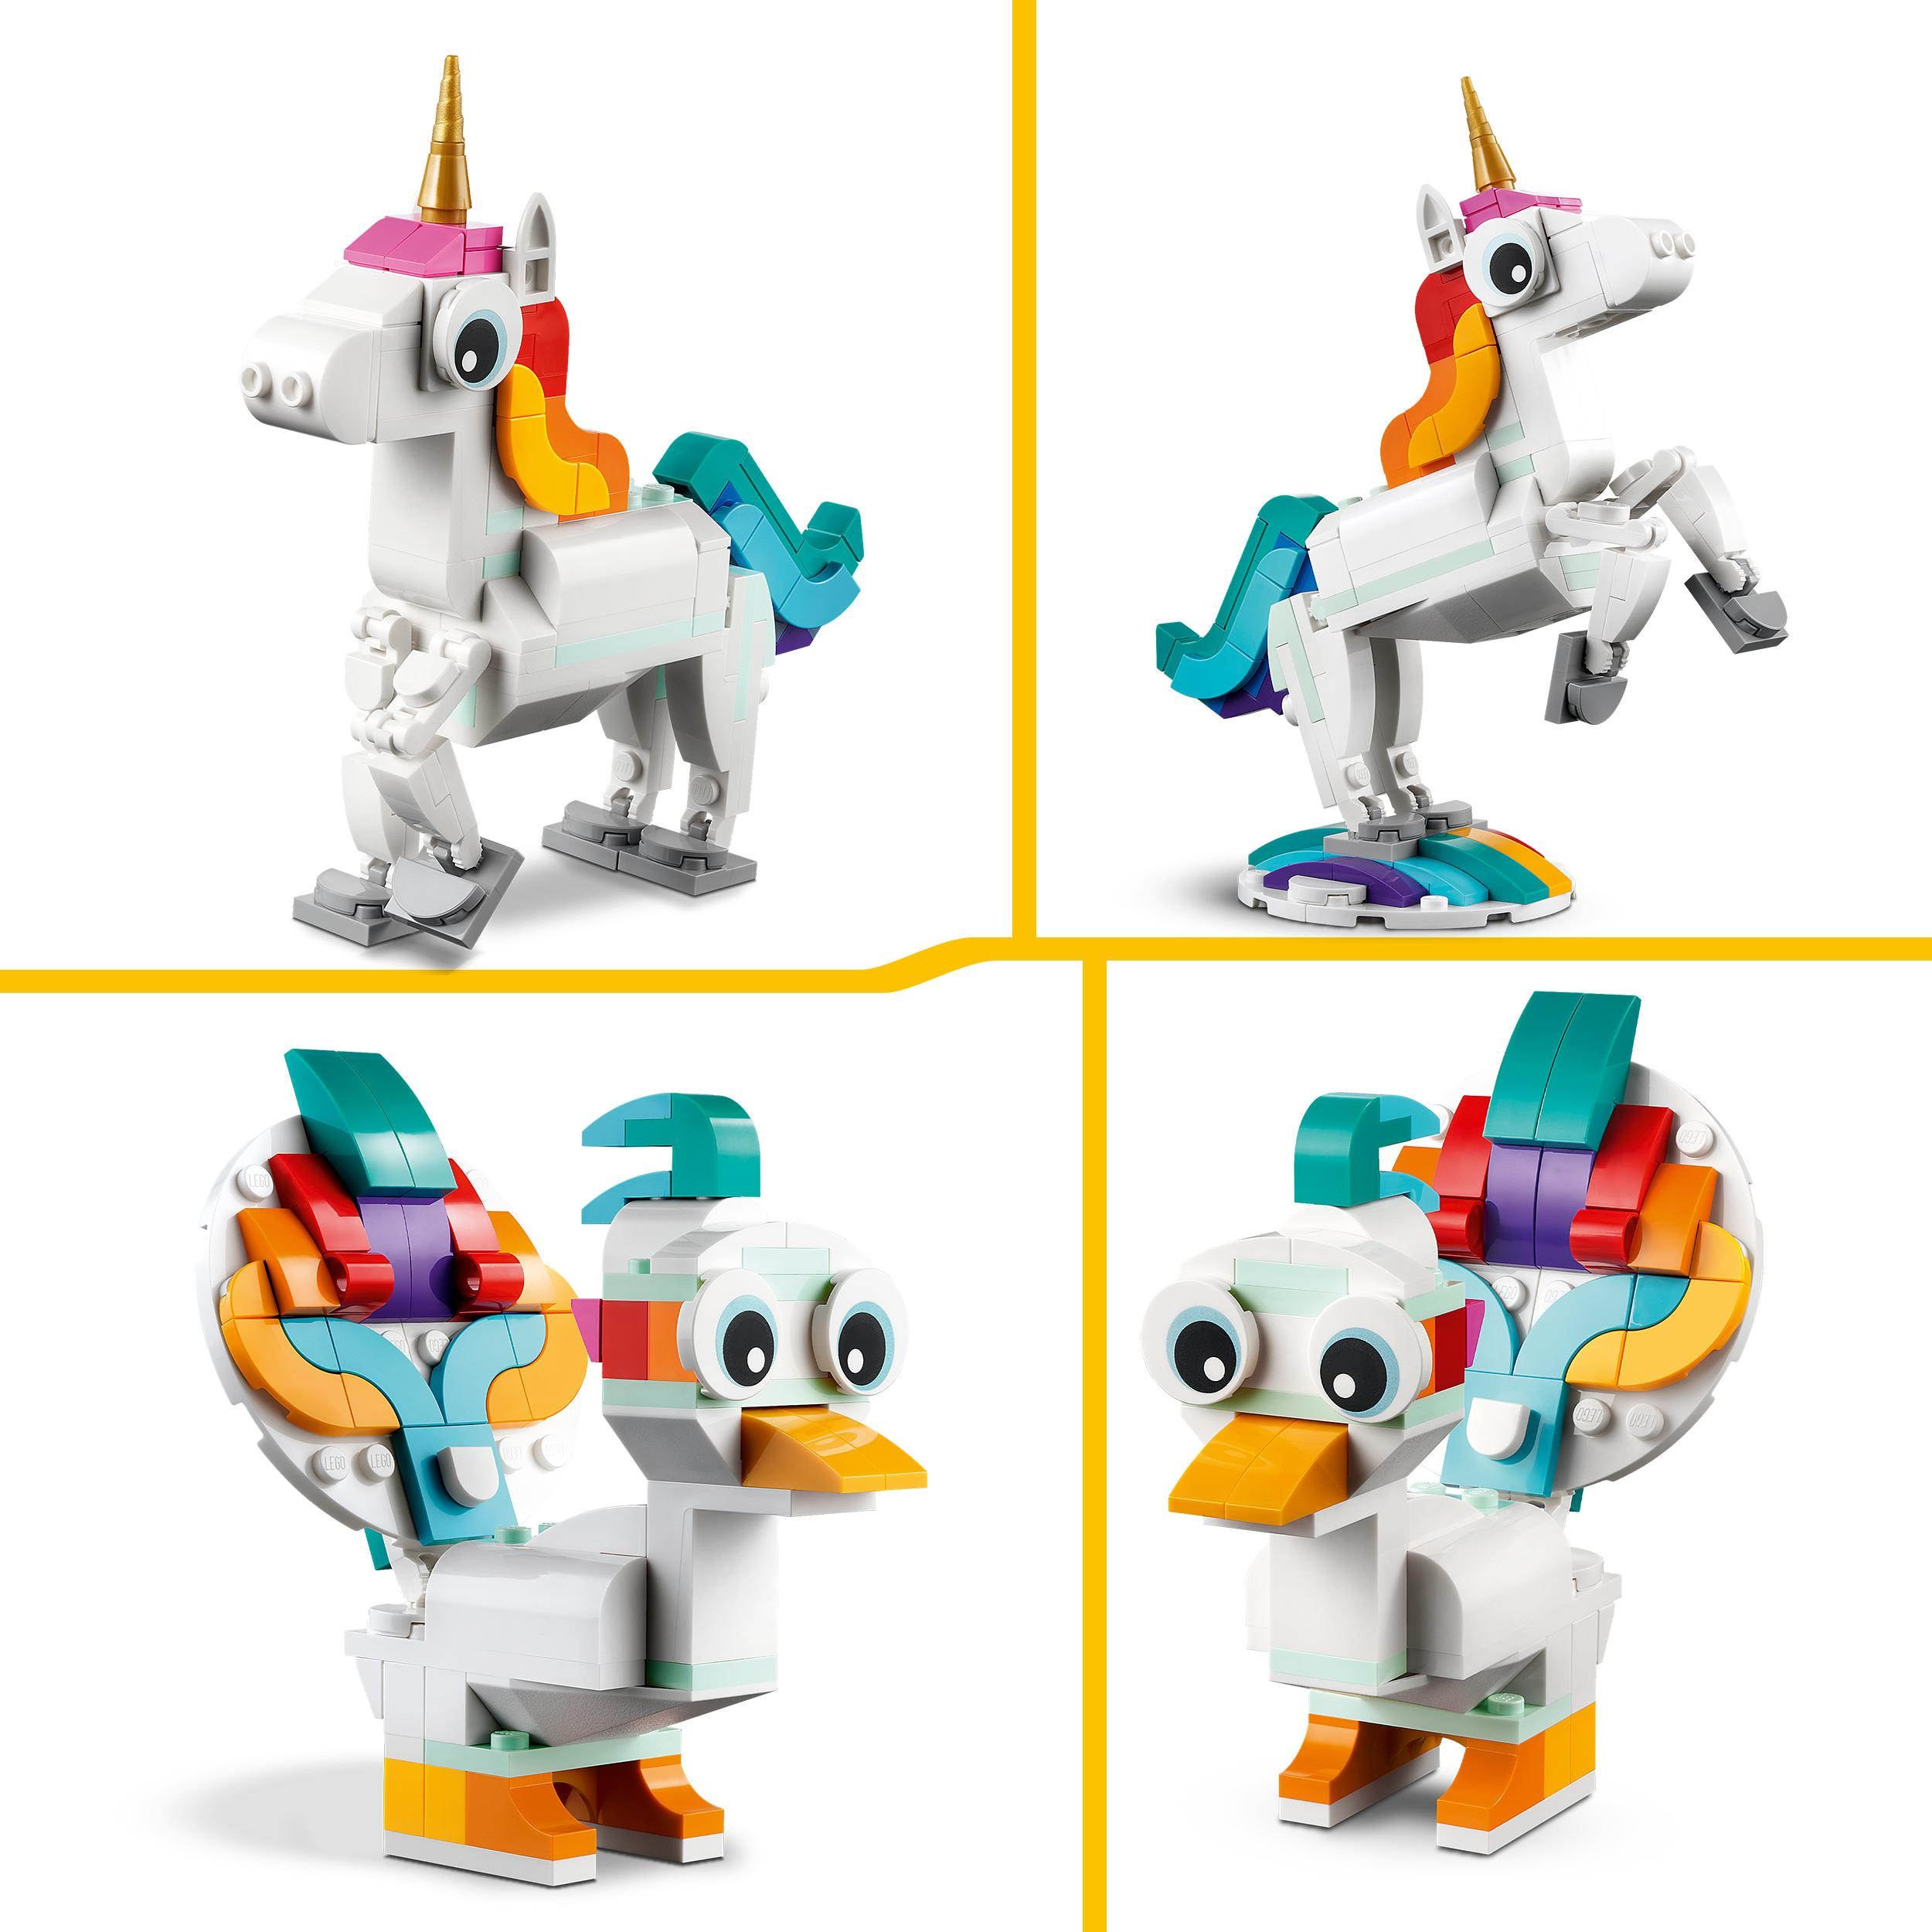 LEGO Creator 31140 Magisches Bausatz, Mehrfarbig Einhorn